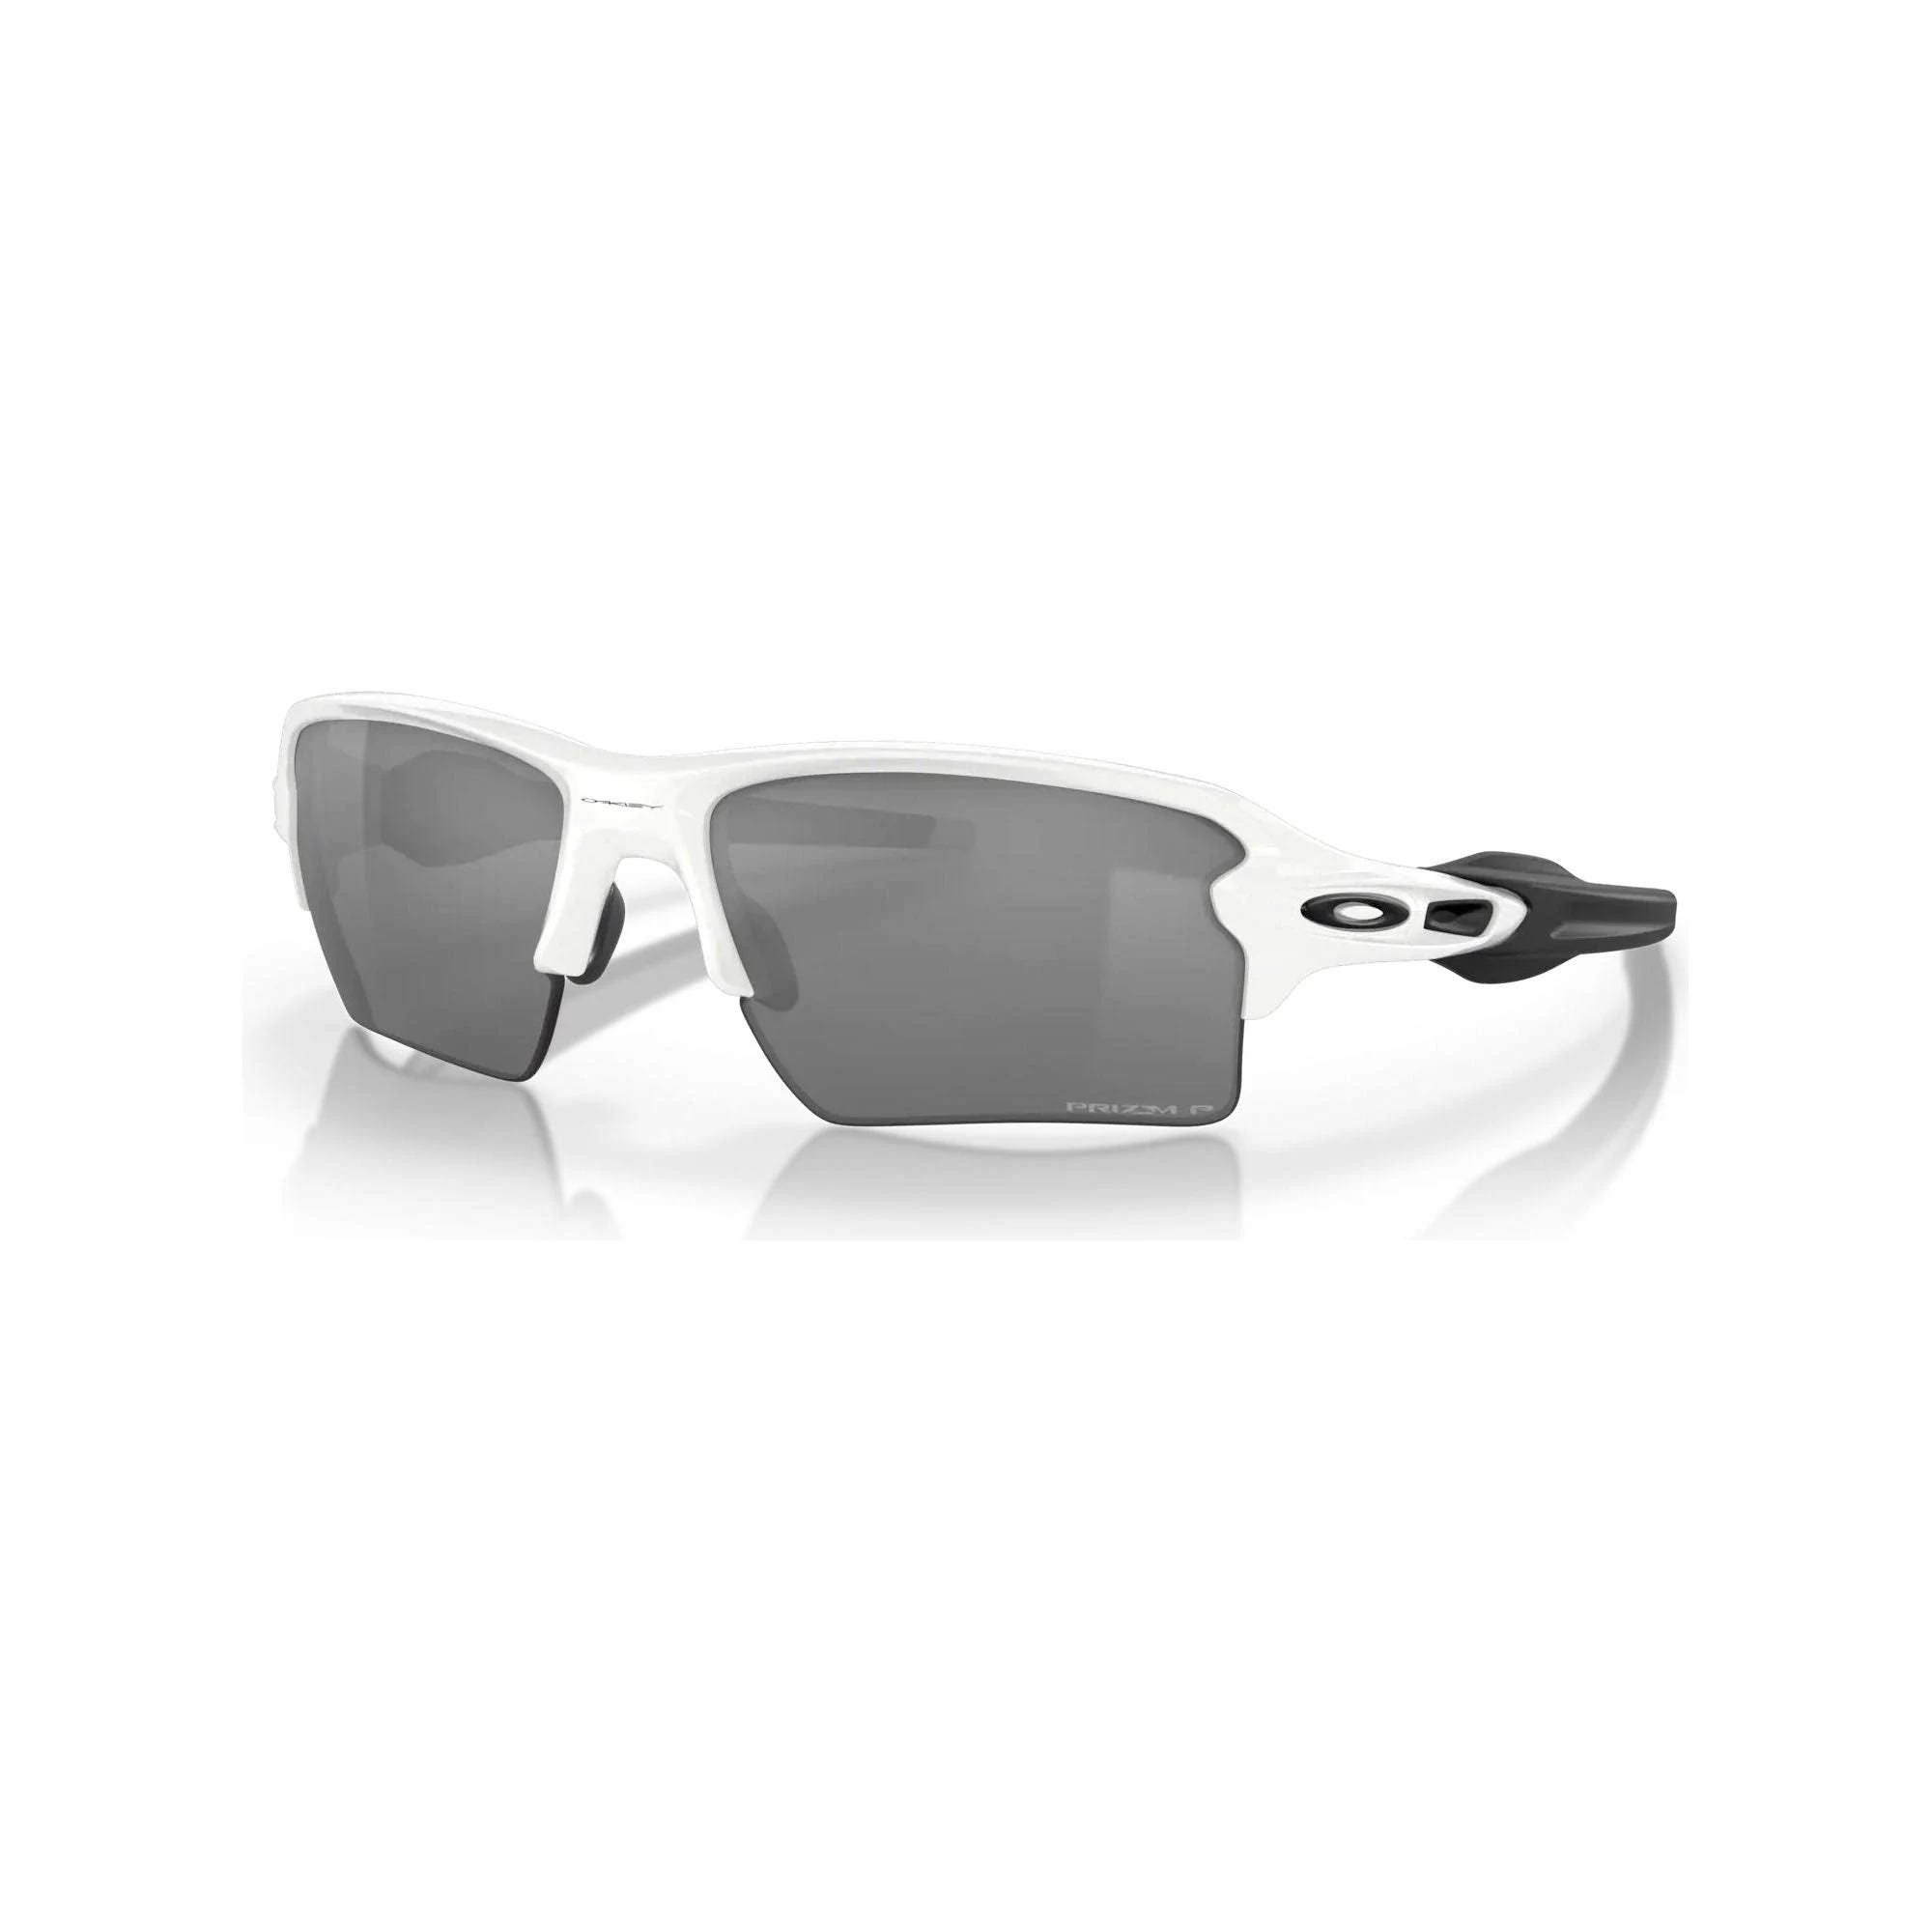 Oakley Flak 2.0 XL Sunglasses with Lightweight O Matter Frame and Unobtainium Details | Image